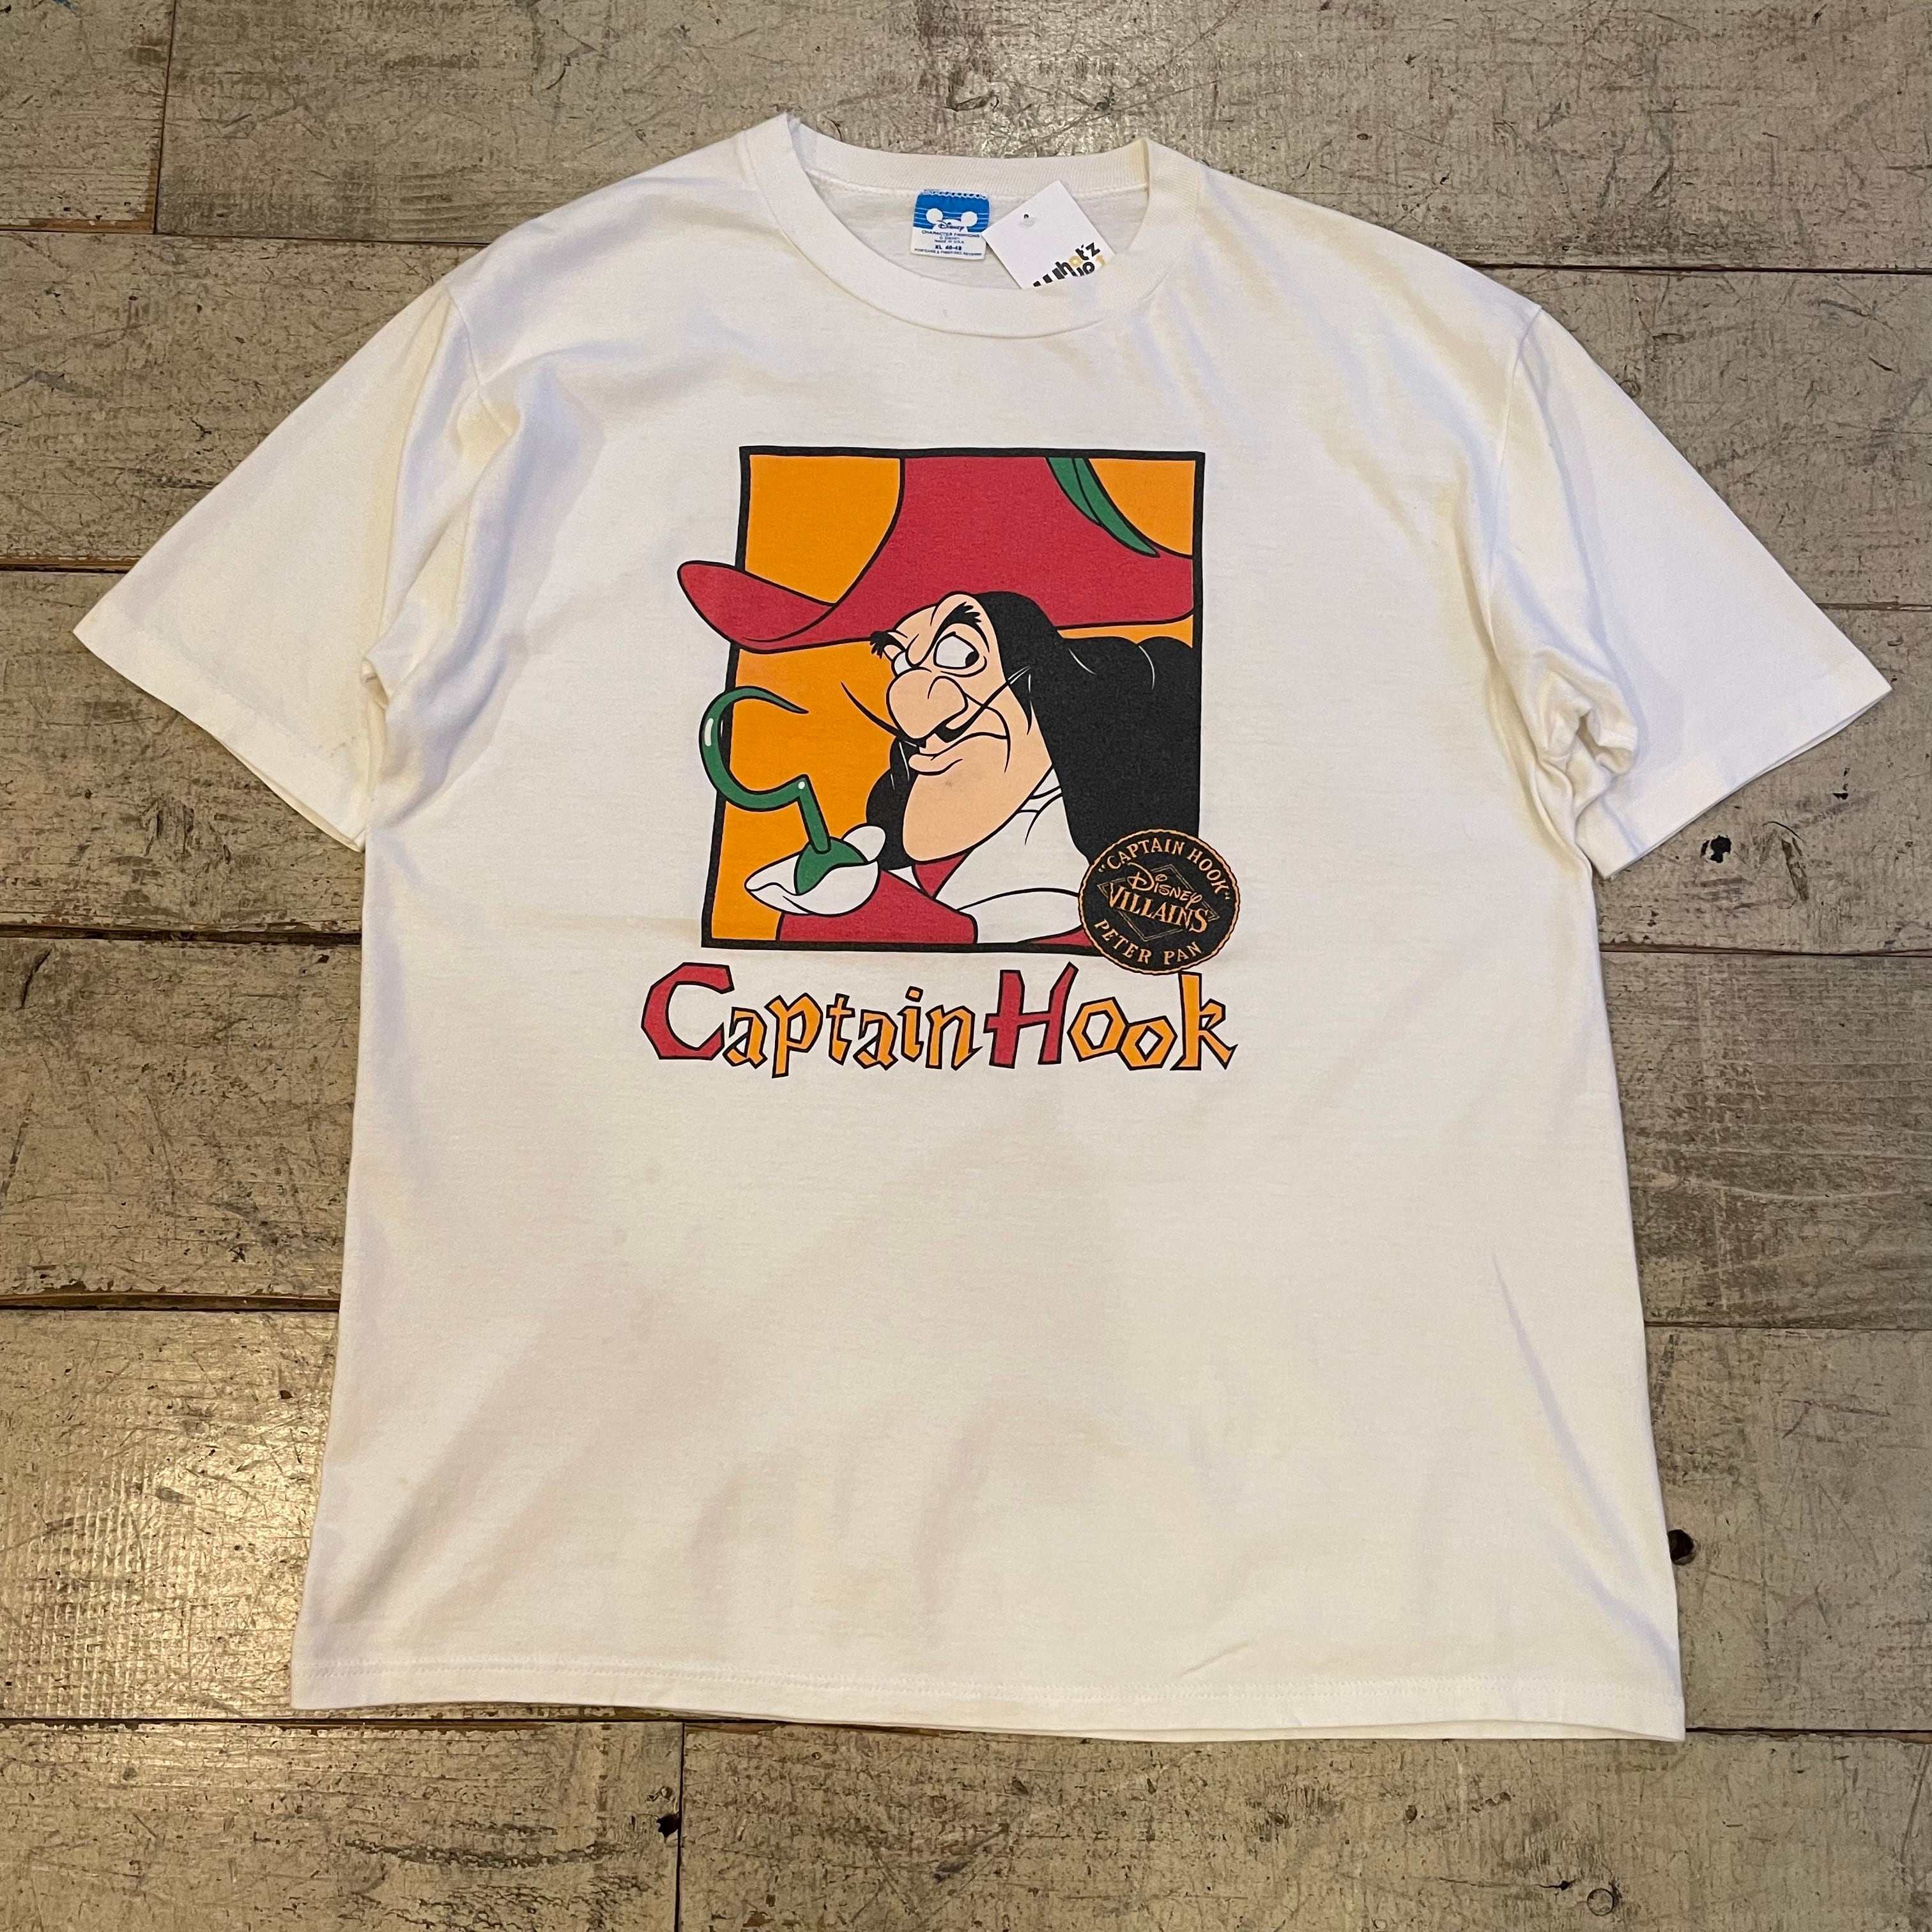 Special!! Captain Hook T-shirt